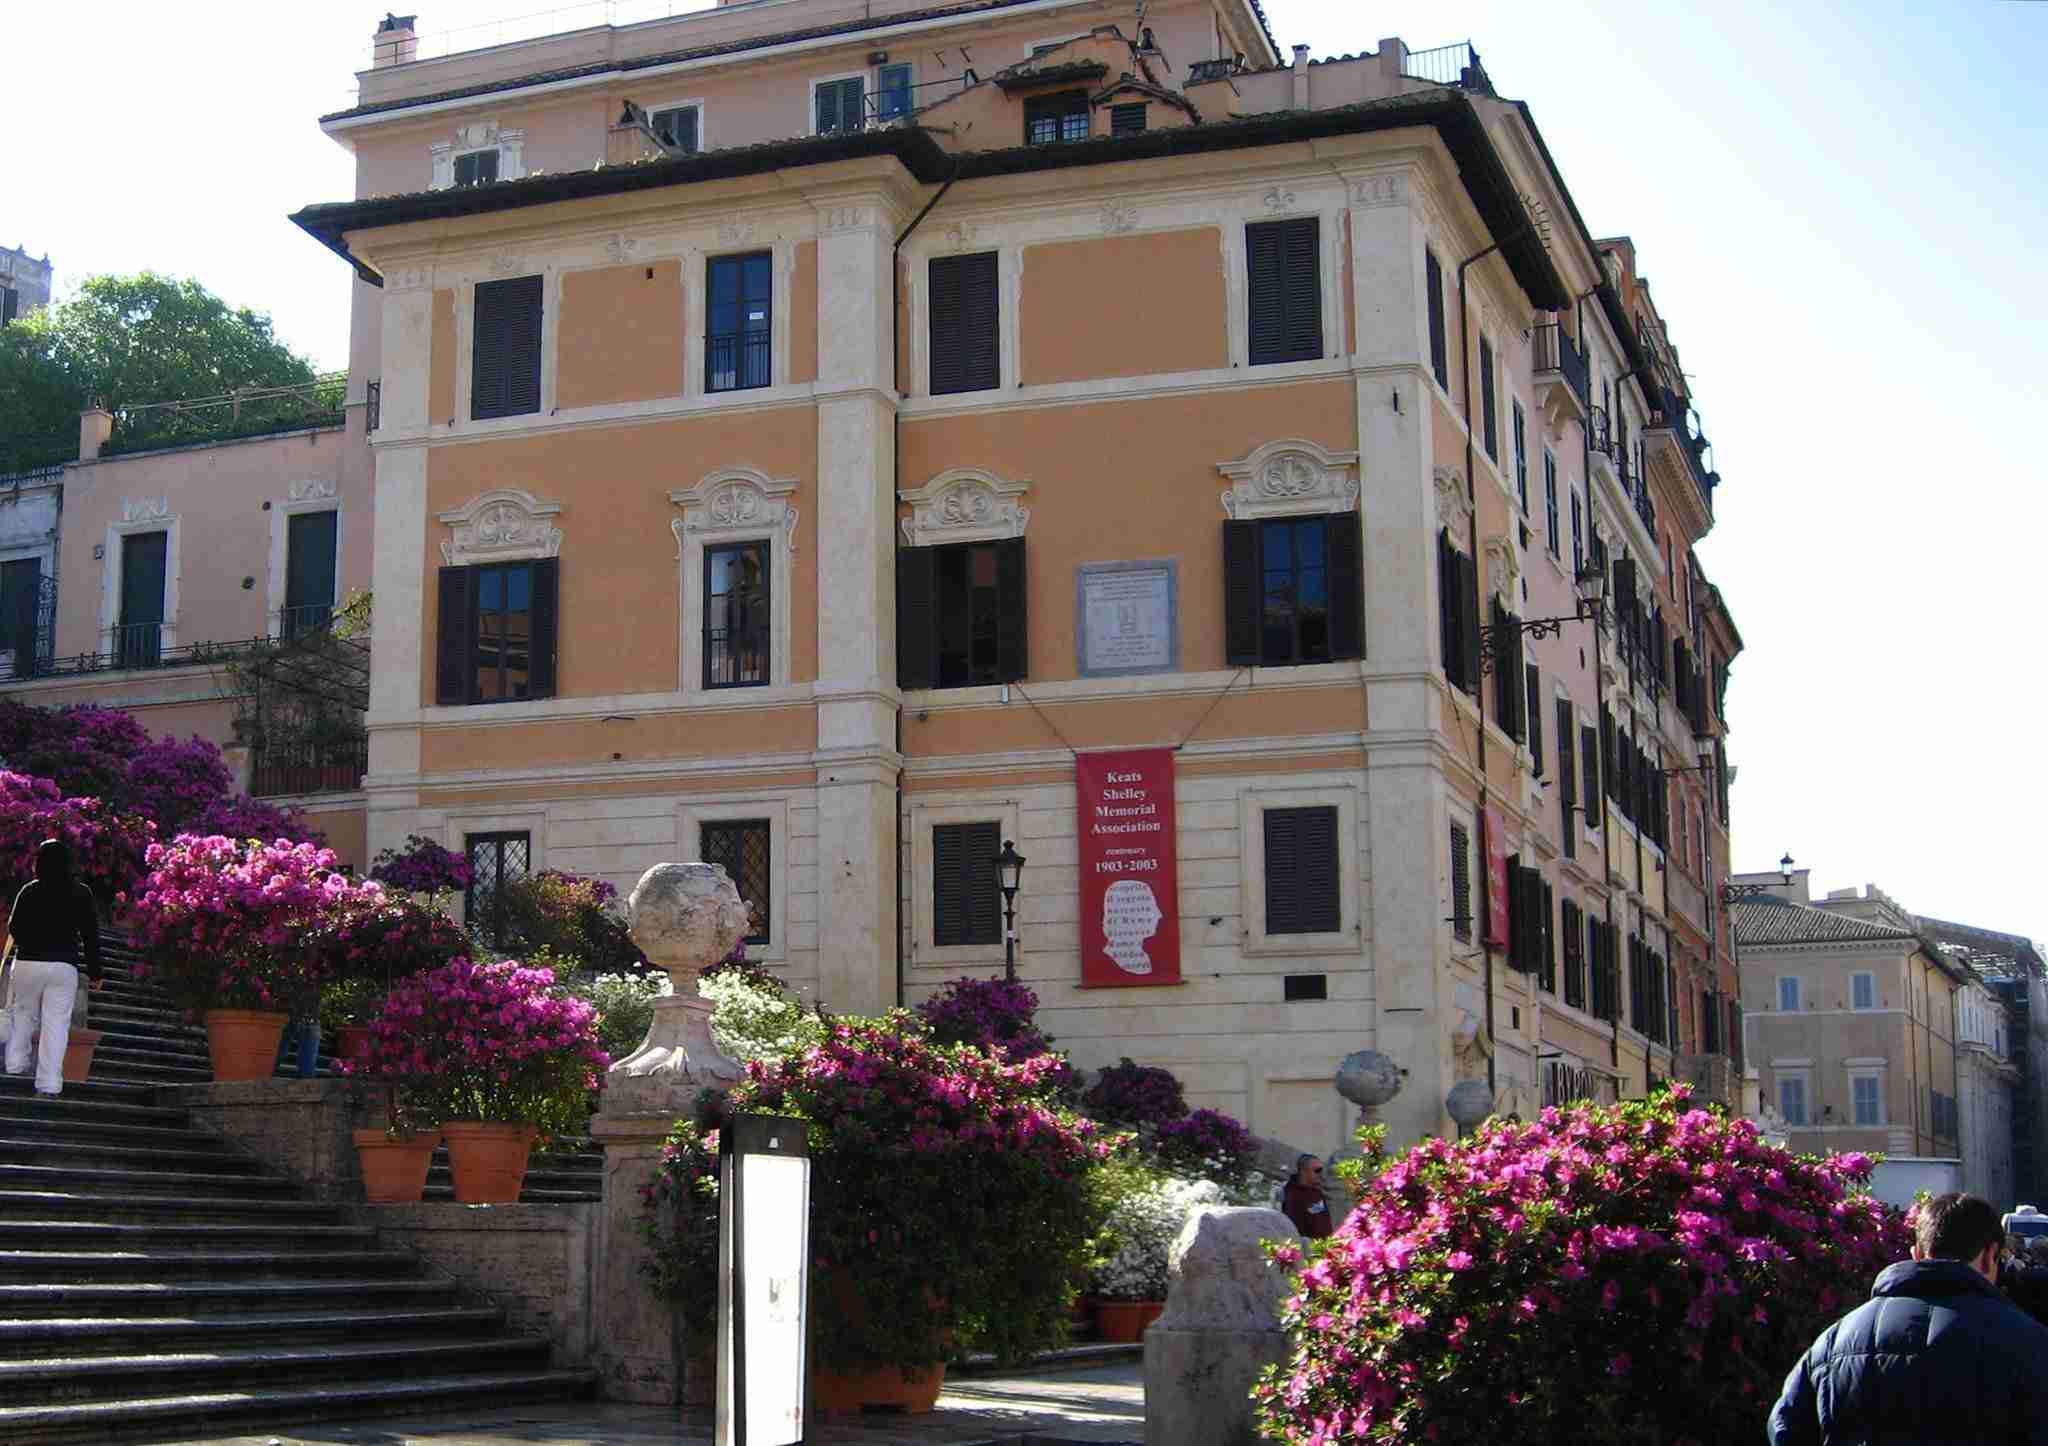 Keats Shelley House at the Spanish Steps, Rome